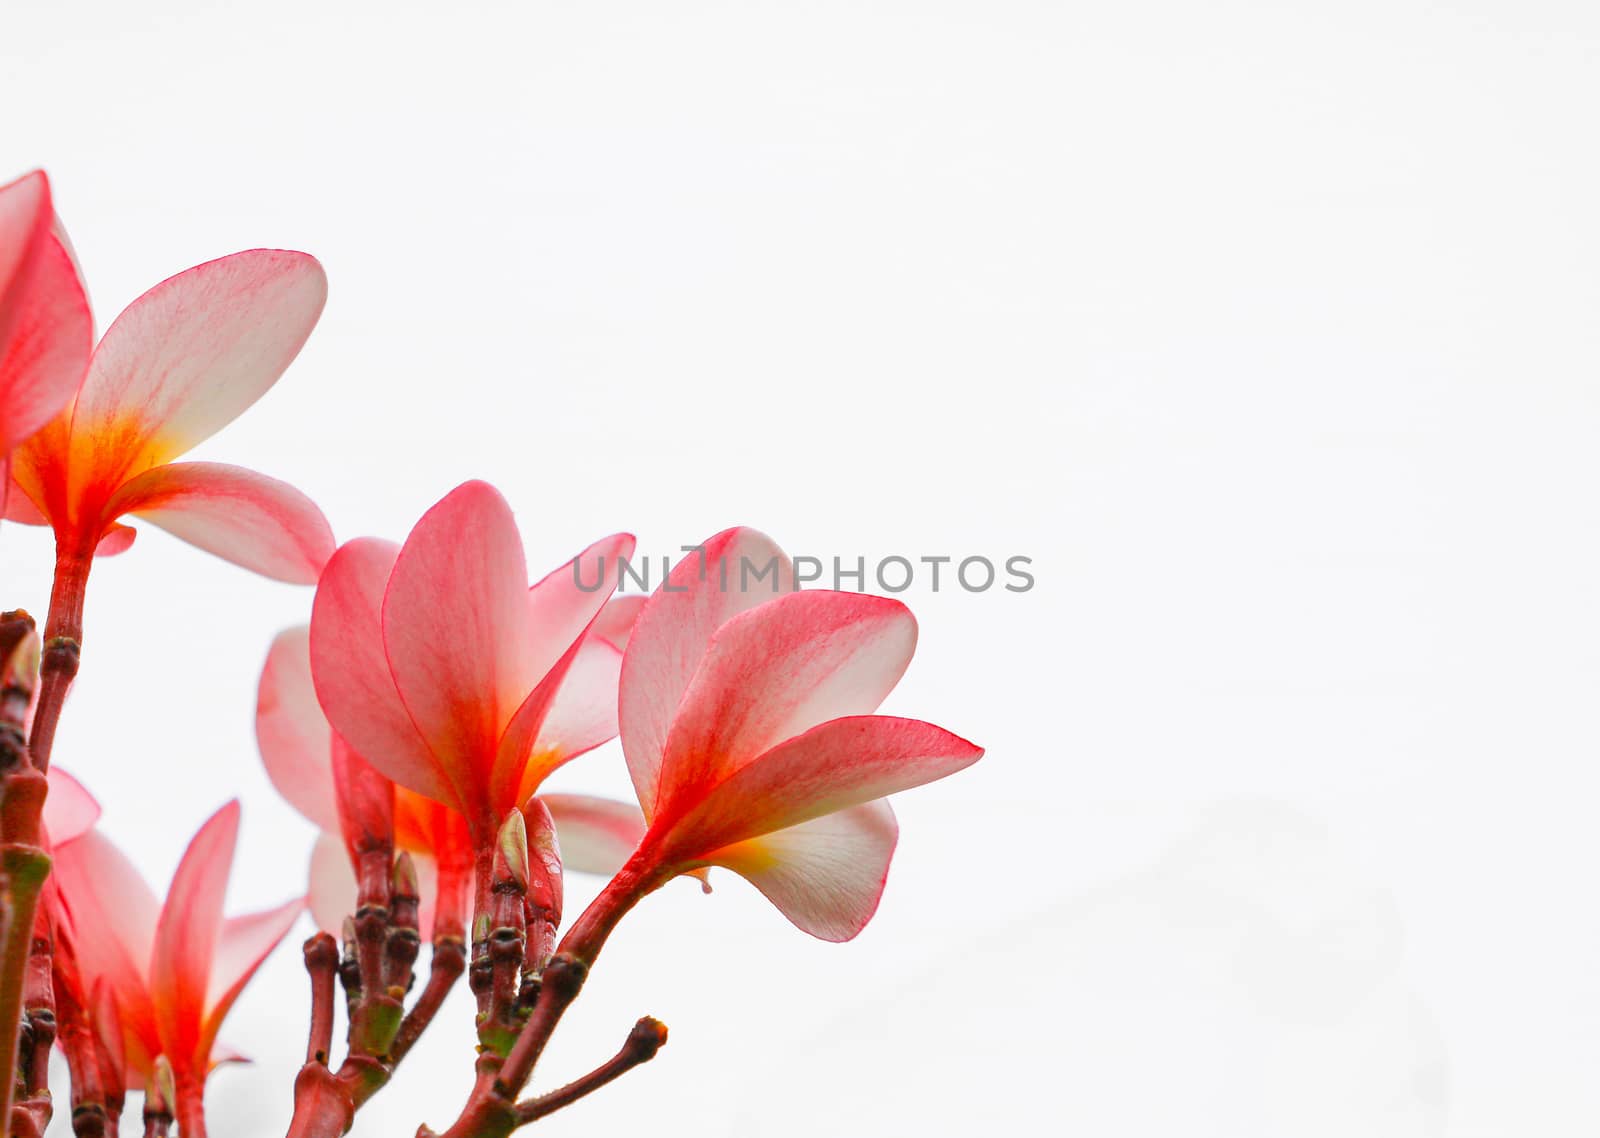 plumeria flowers beautiful pink frangipani on white background by pramot